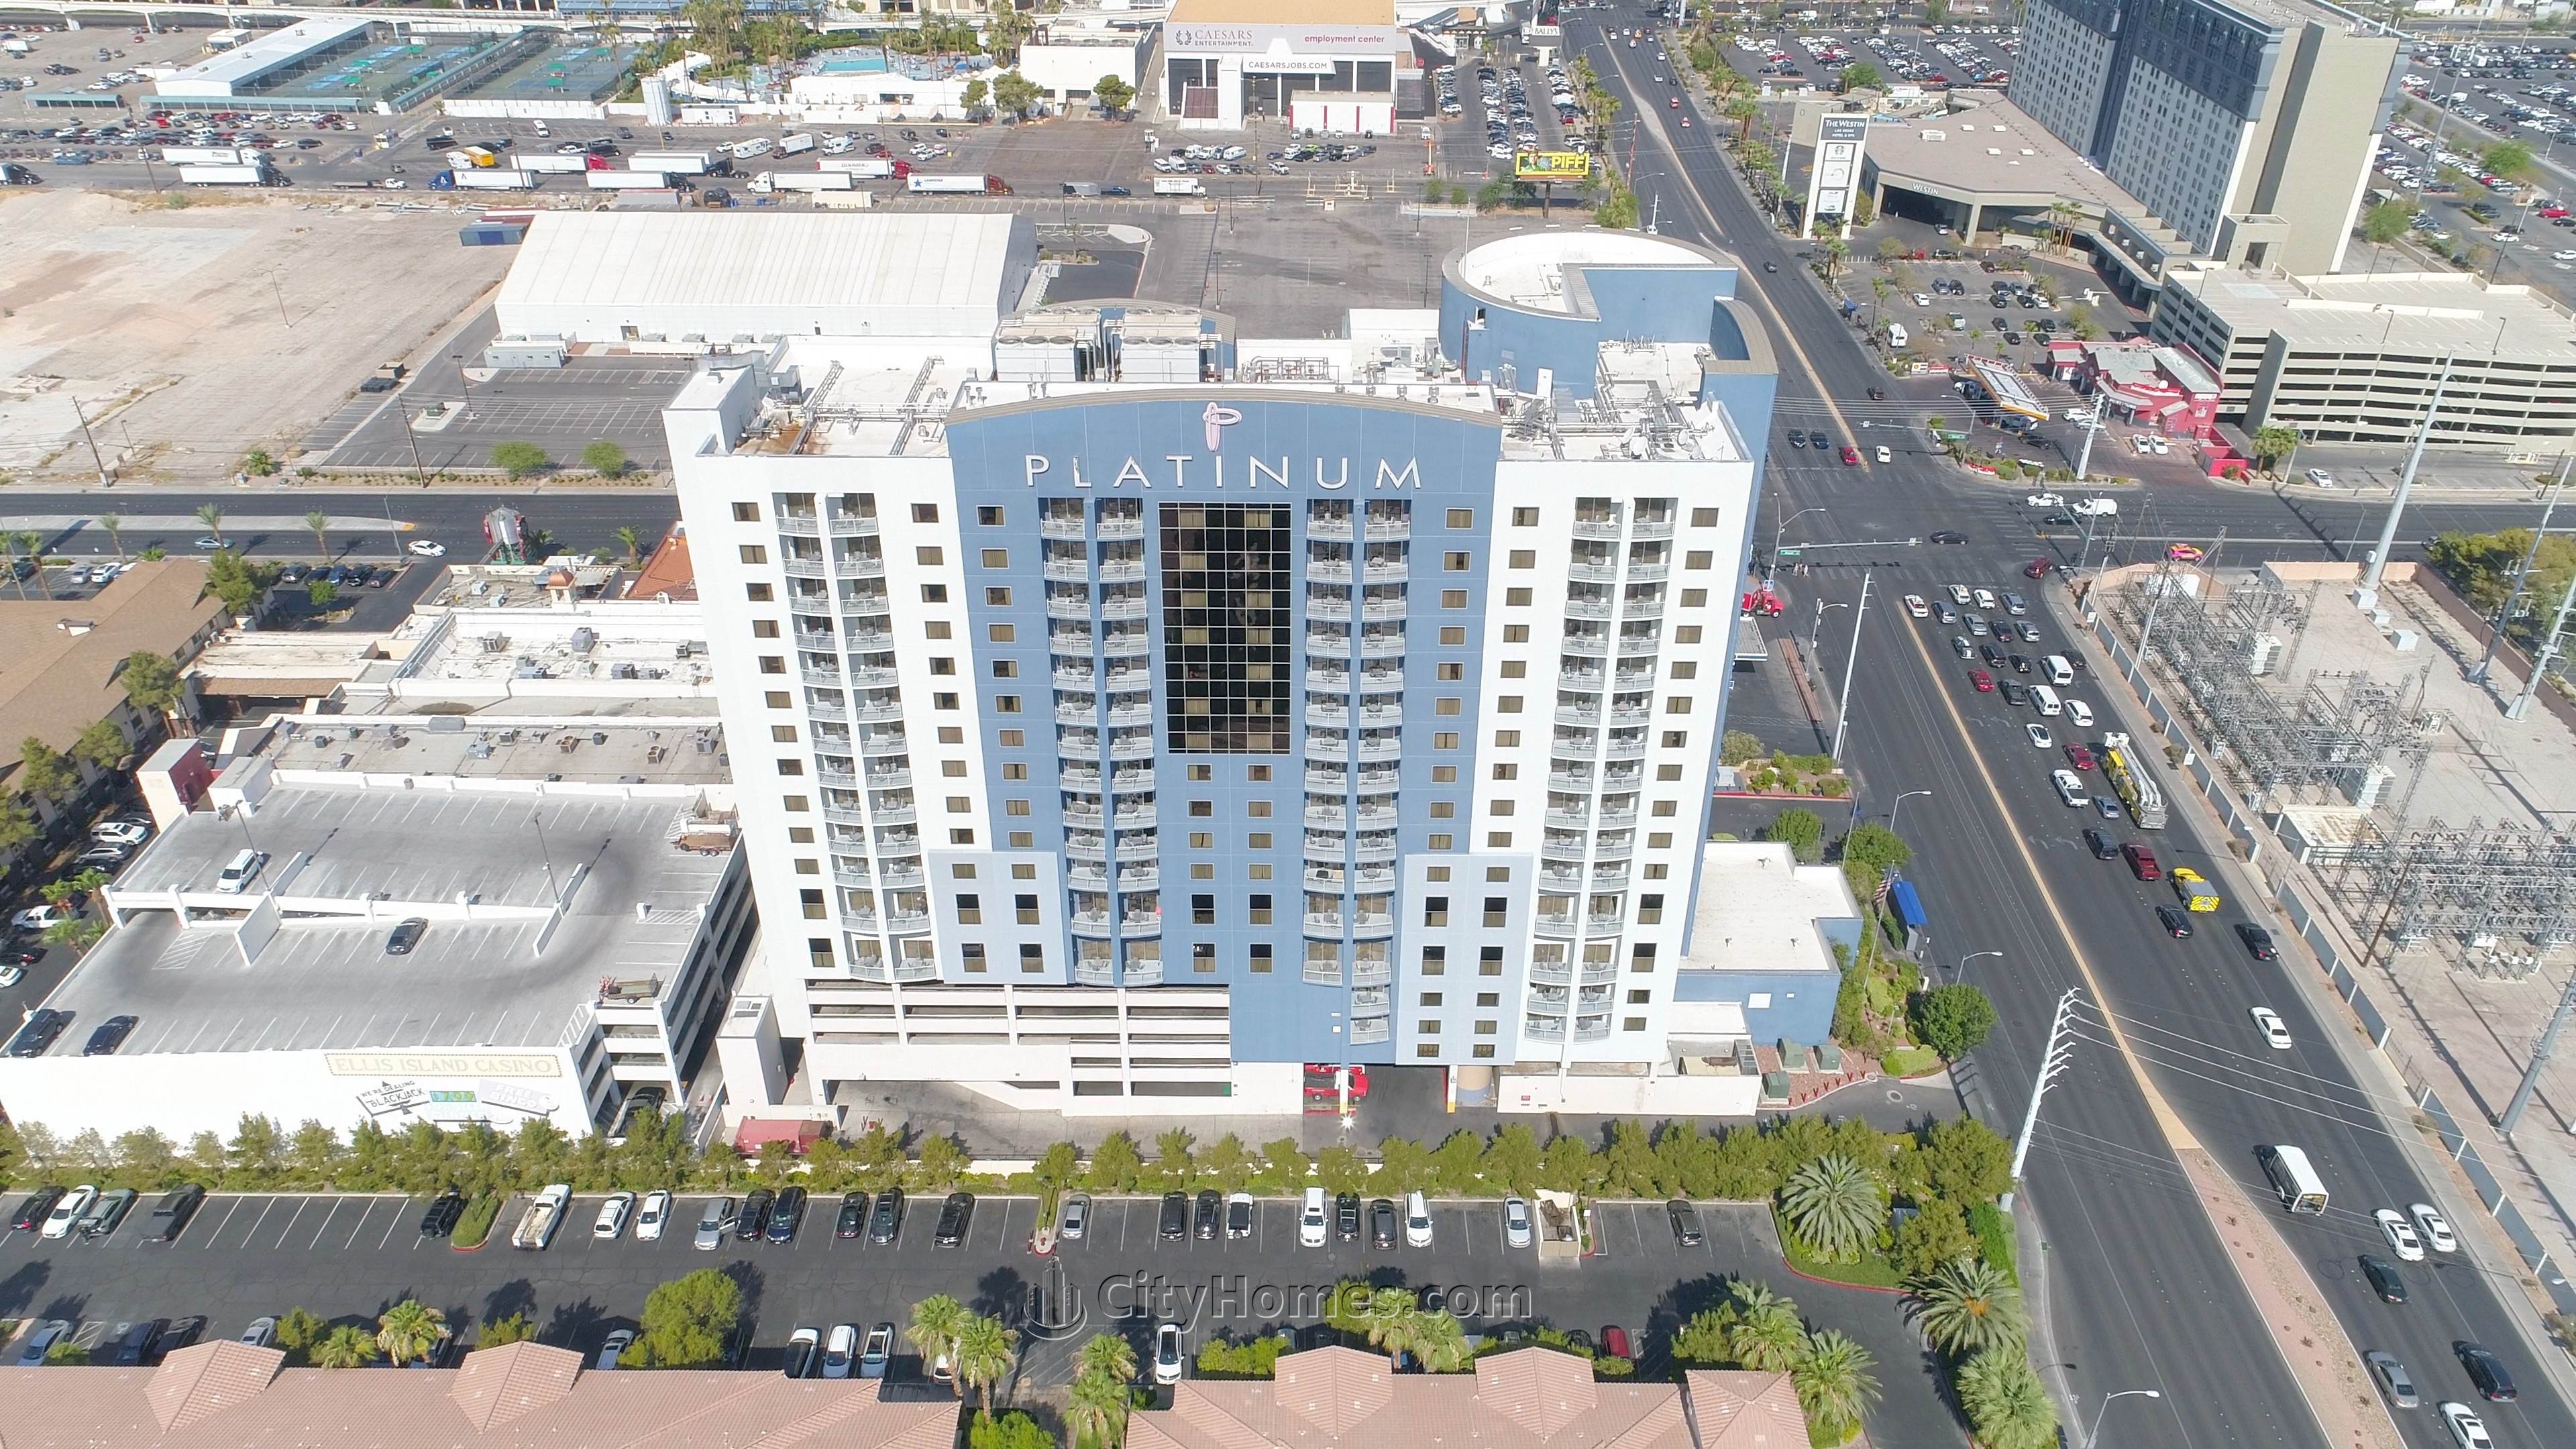 Platinum Resort gebouw op 211 E Flamingo Road, Paradise, Las Vegas, NV 89169